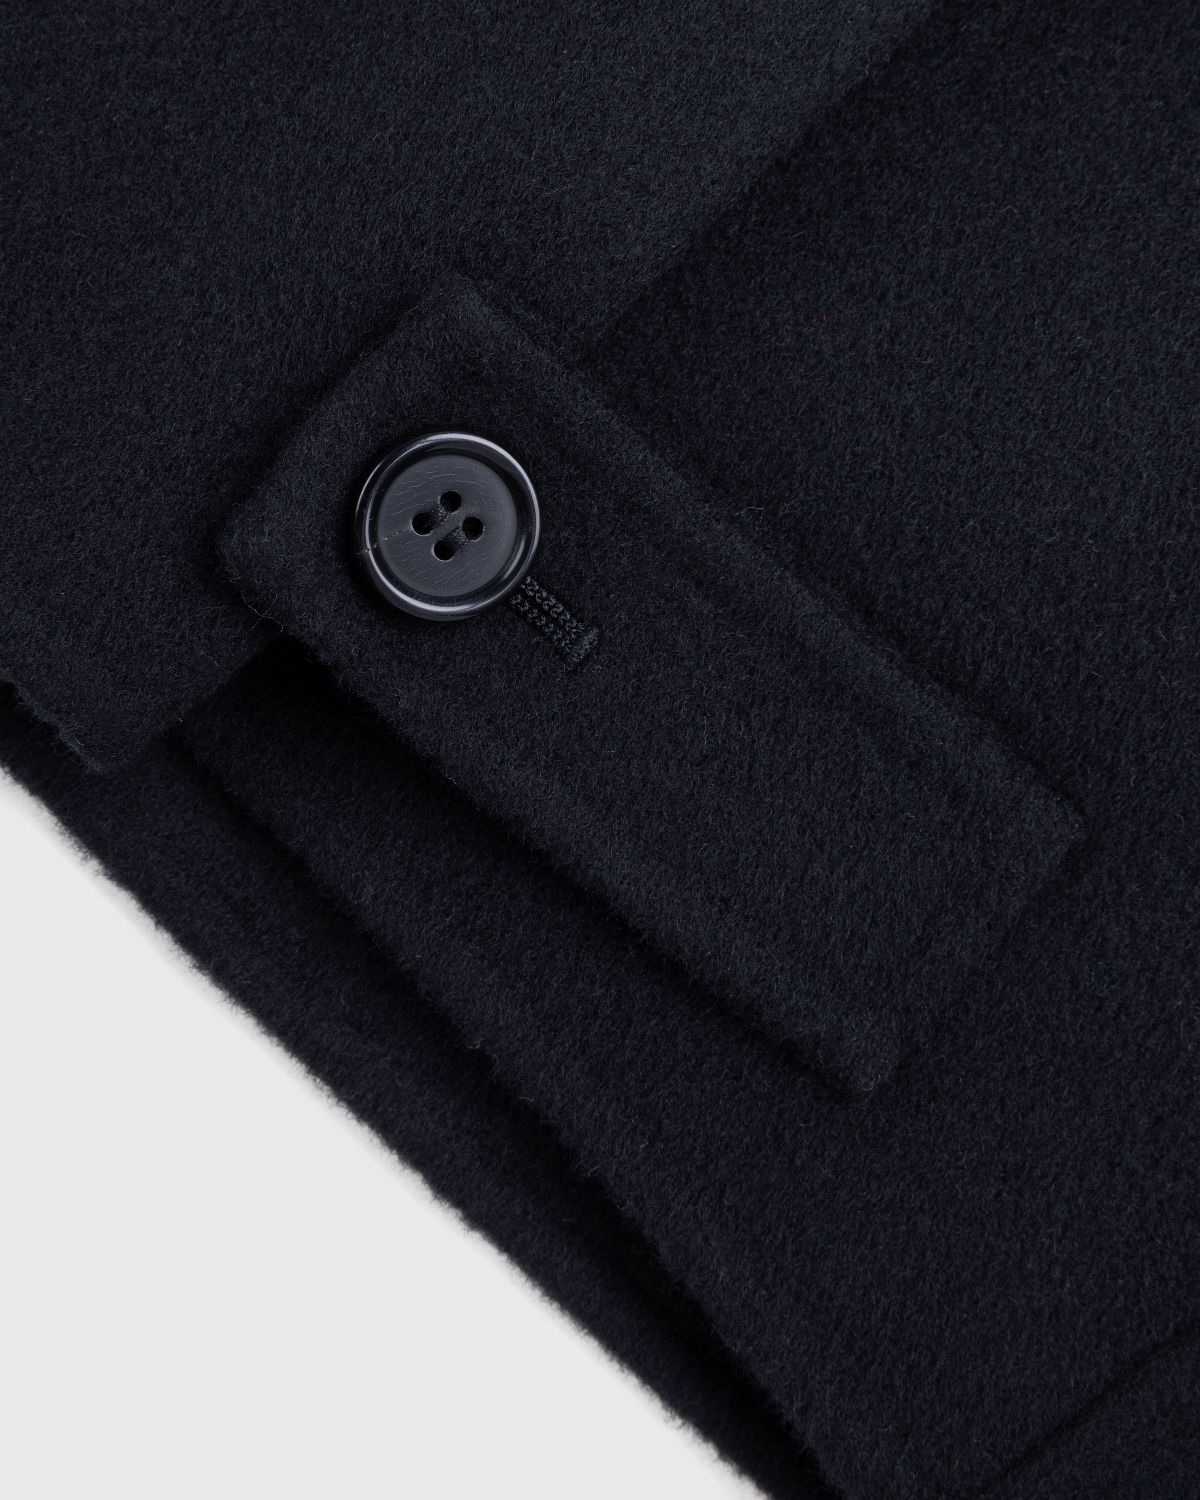 Acne Studios – Wool Zipper Jacket Black - Jackets - Black - Image 6